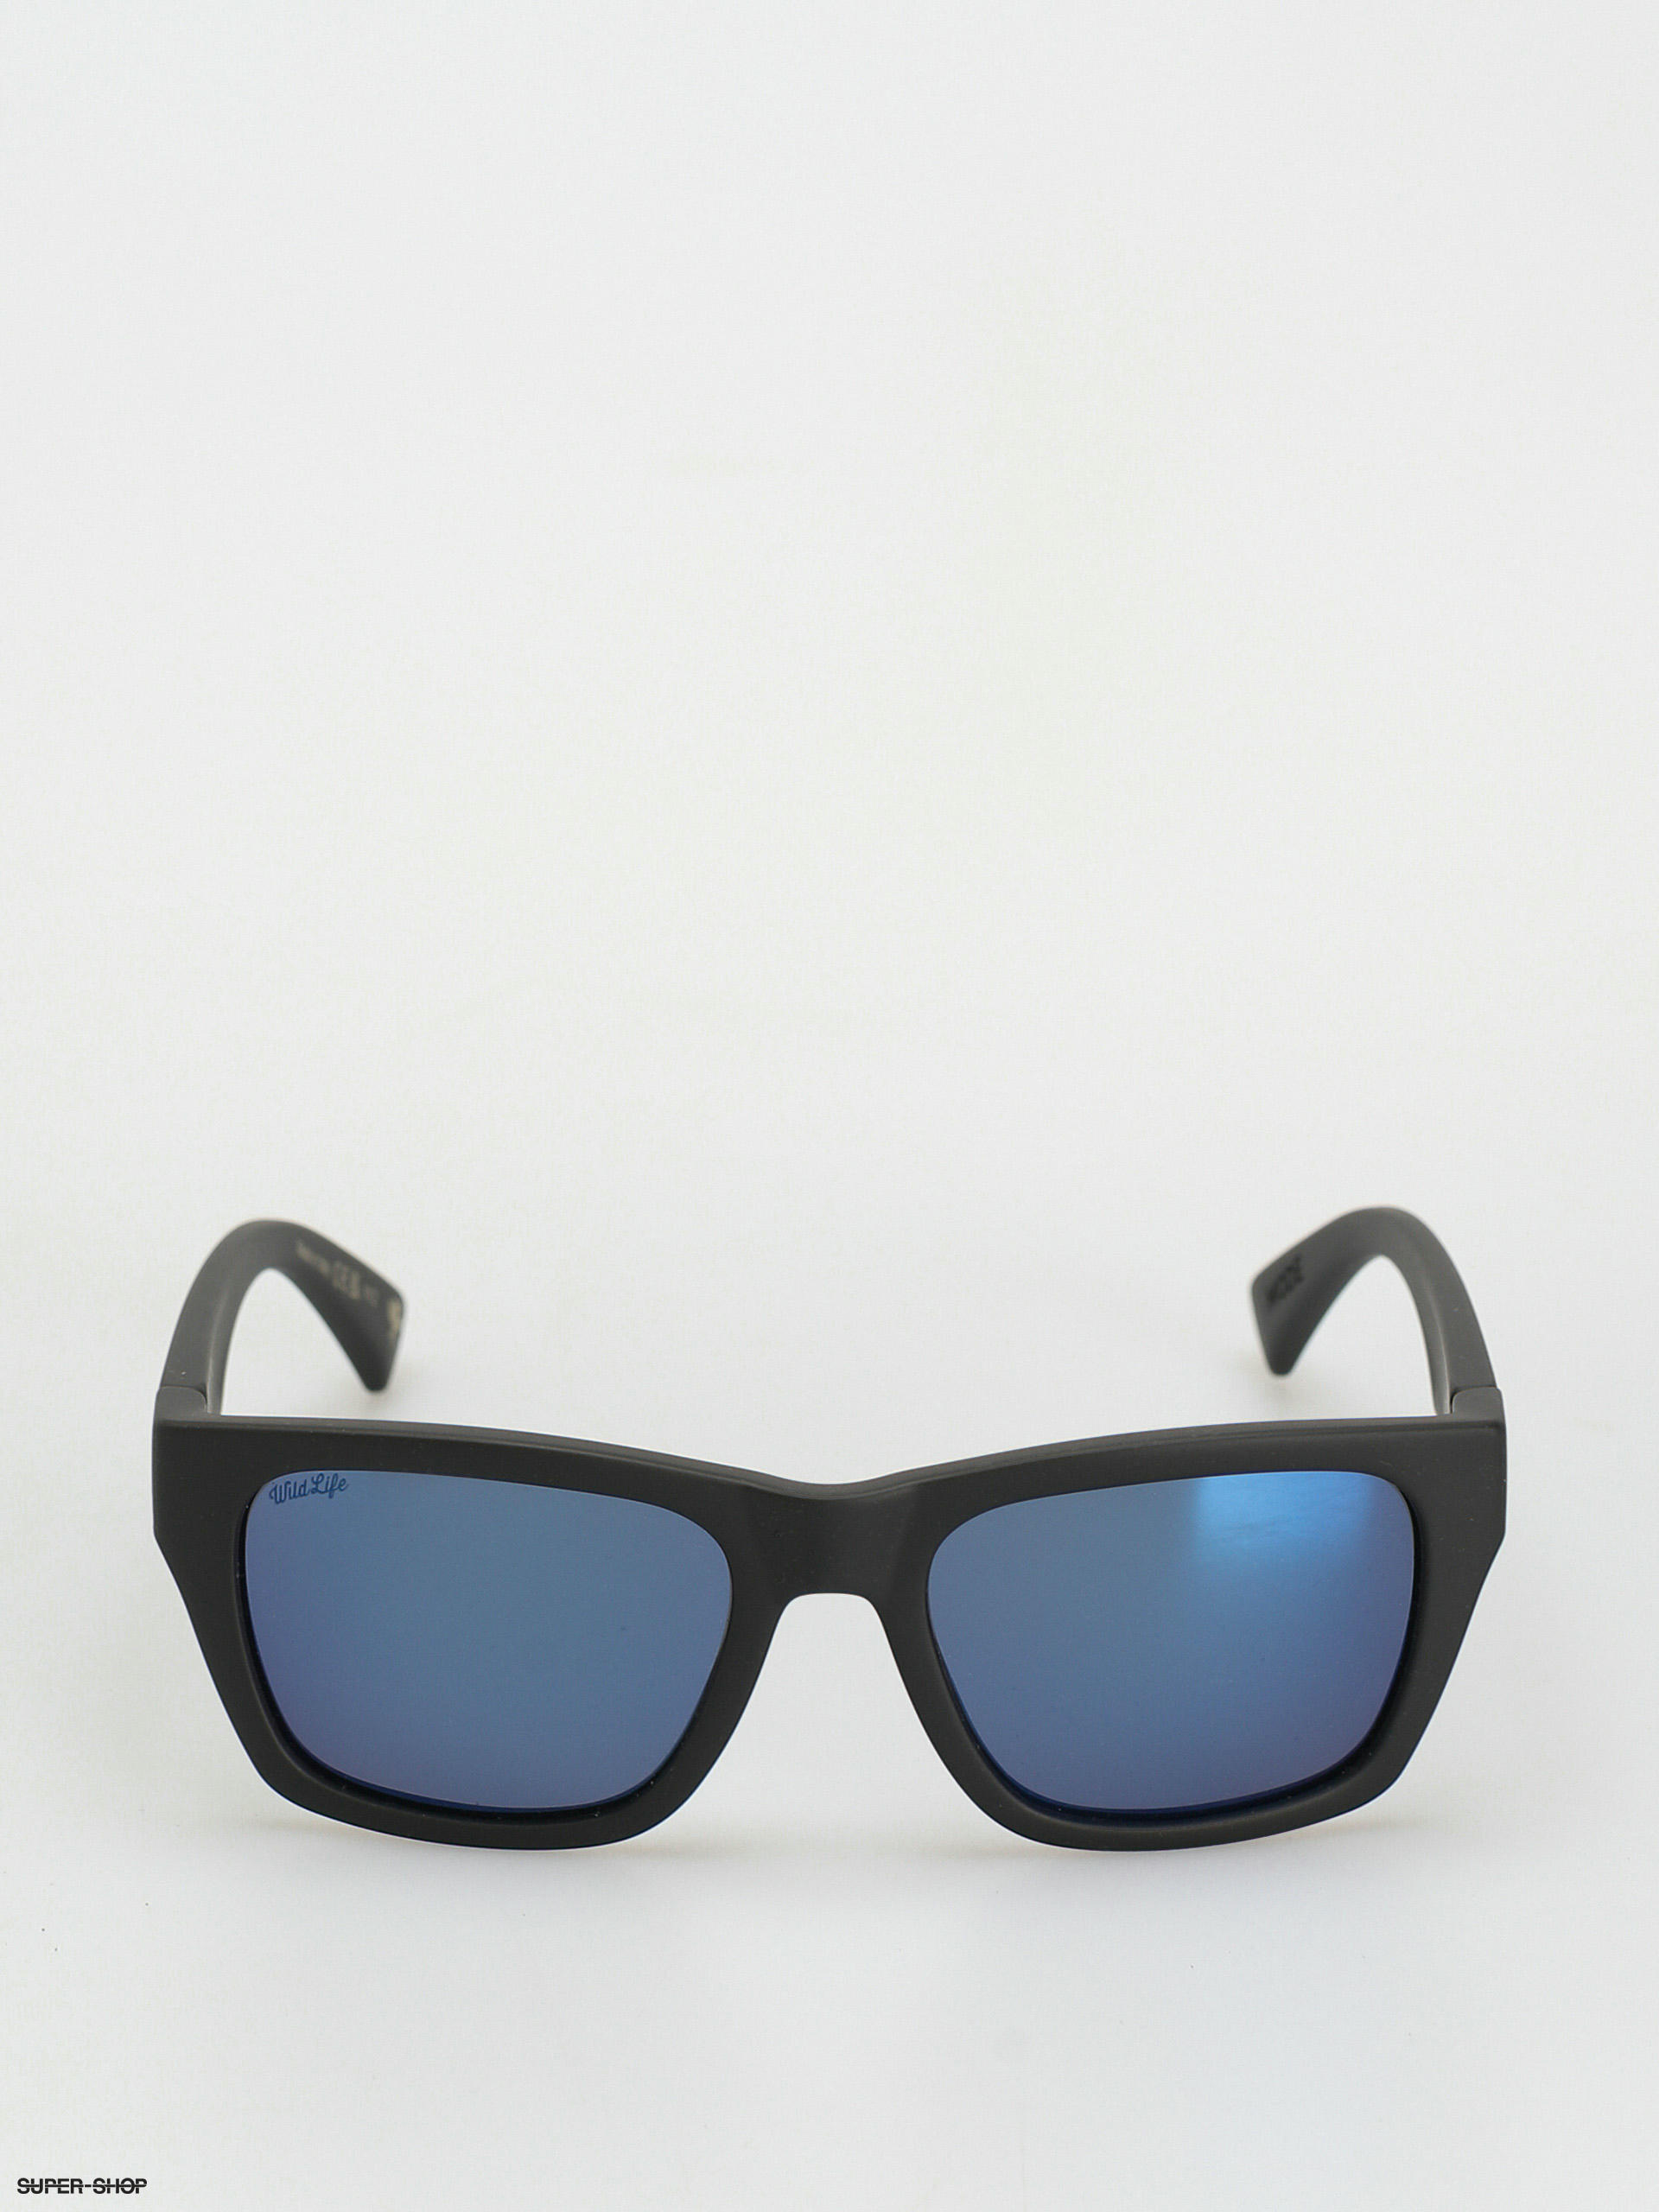 Von Zipper plr) flsh Mode Sunglasses sat/blu Polar (blk